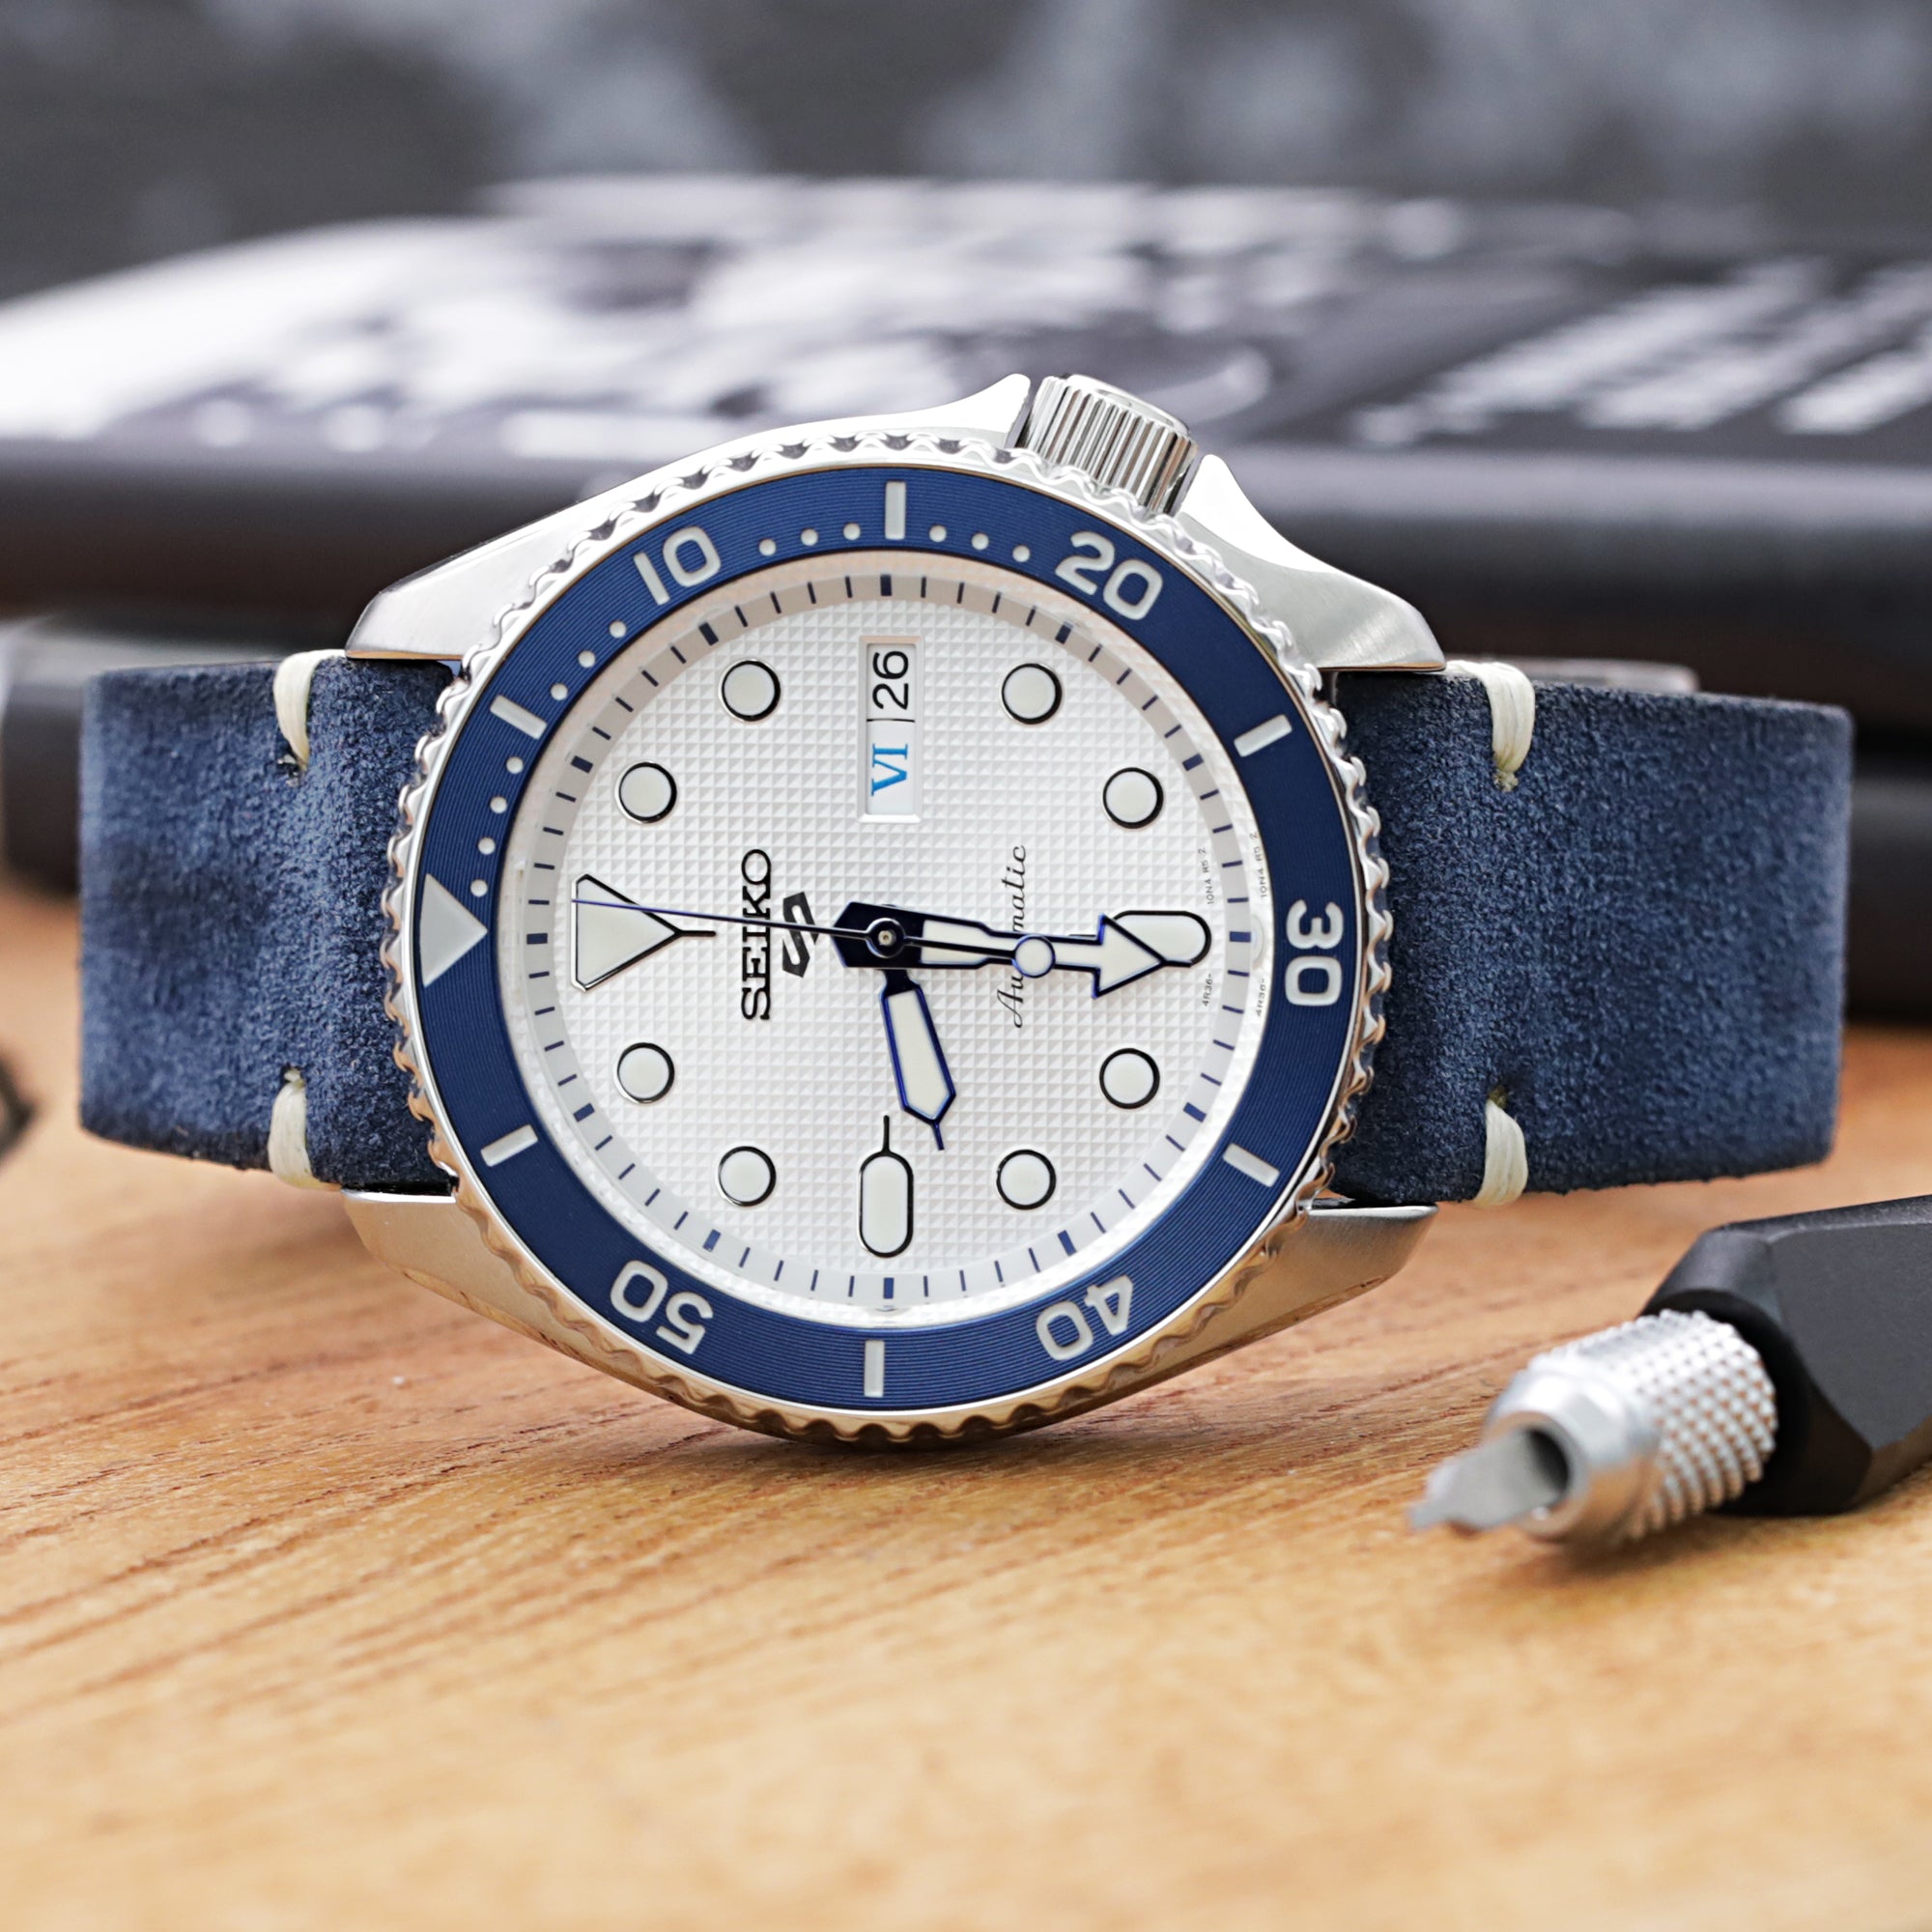 Navy Blue 19mm, 20mm, 21mm, 22mm MiLTAT Quick Release Nubuck Leather Watch Strap, Beige Stitching, Sandblasted Strapcode Watch Bands